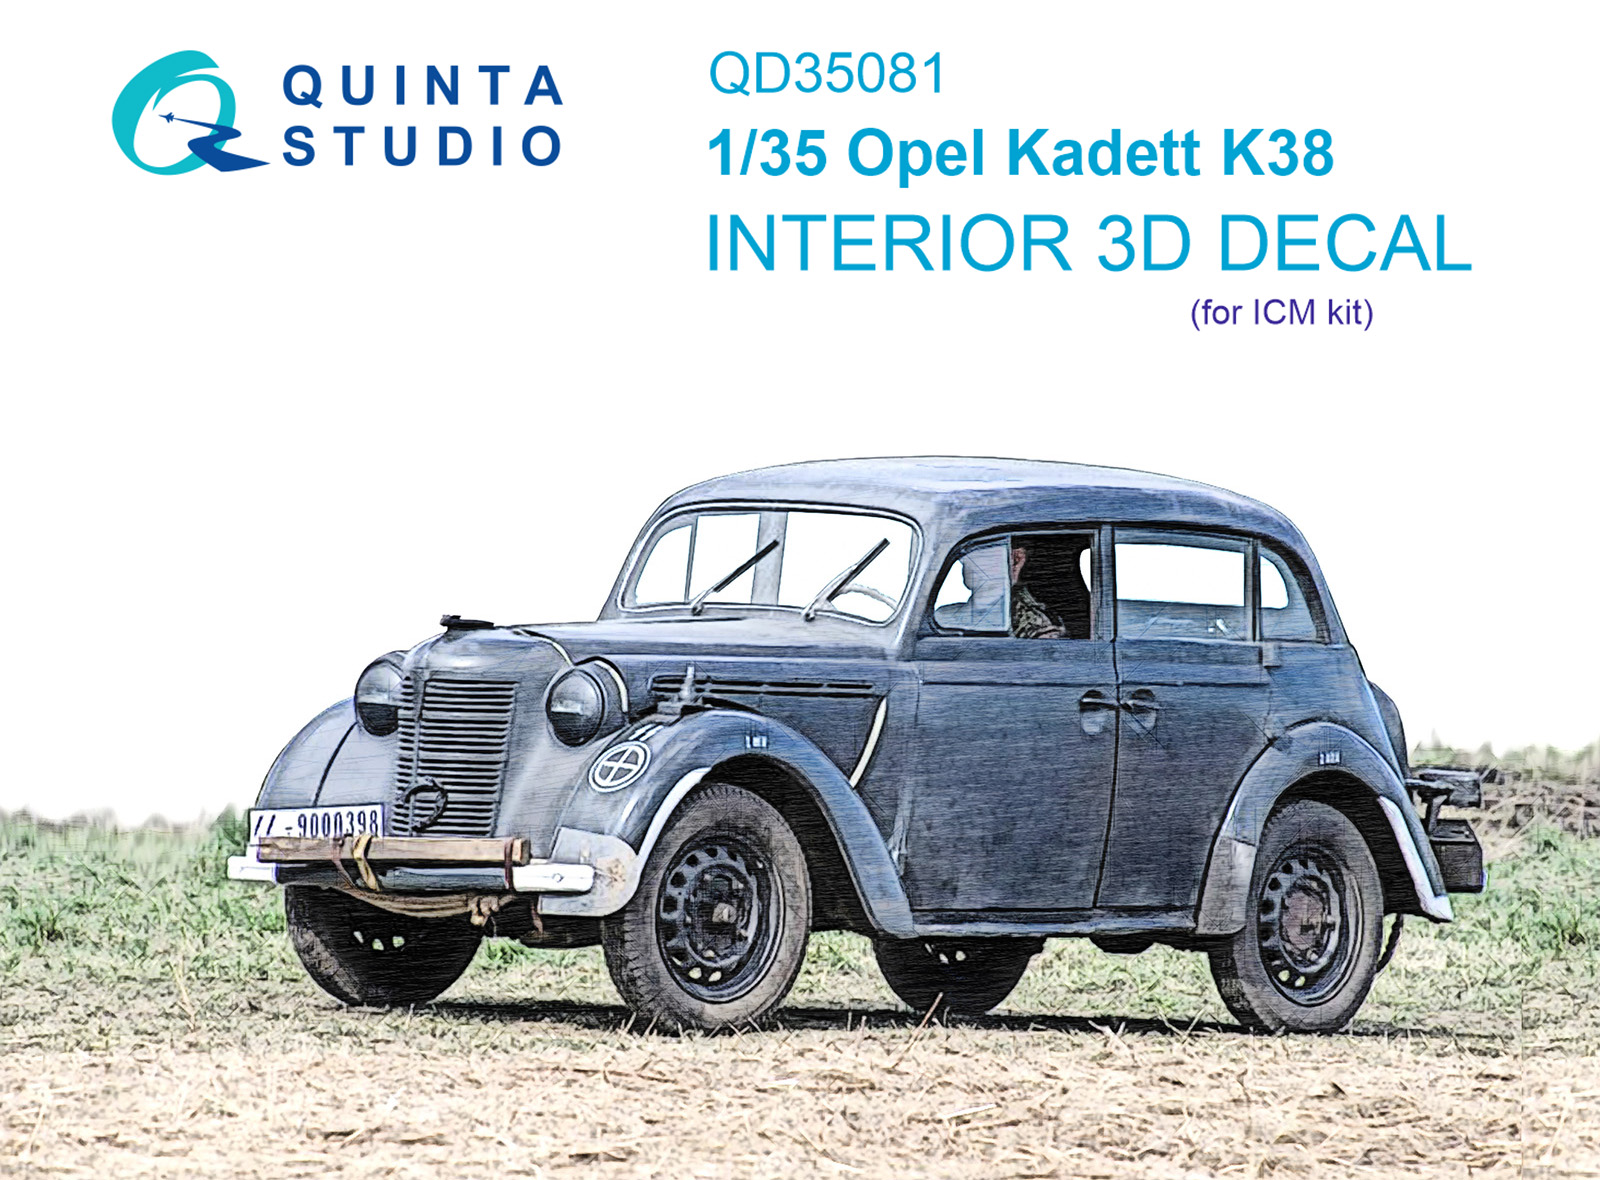 QD35081  декали  3D Декаль интерьера кабины Opel kadett k38 (ICM)  (1:35)